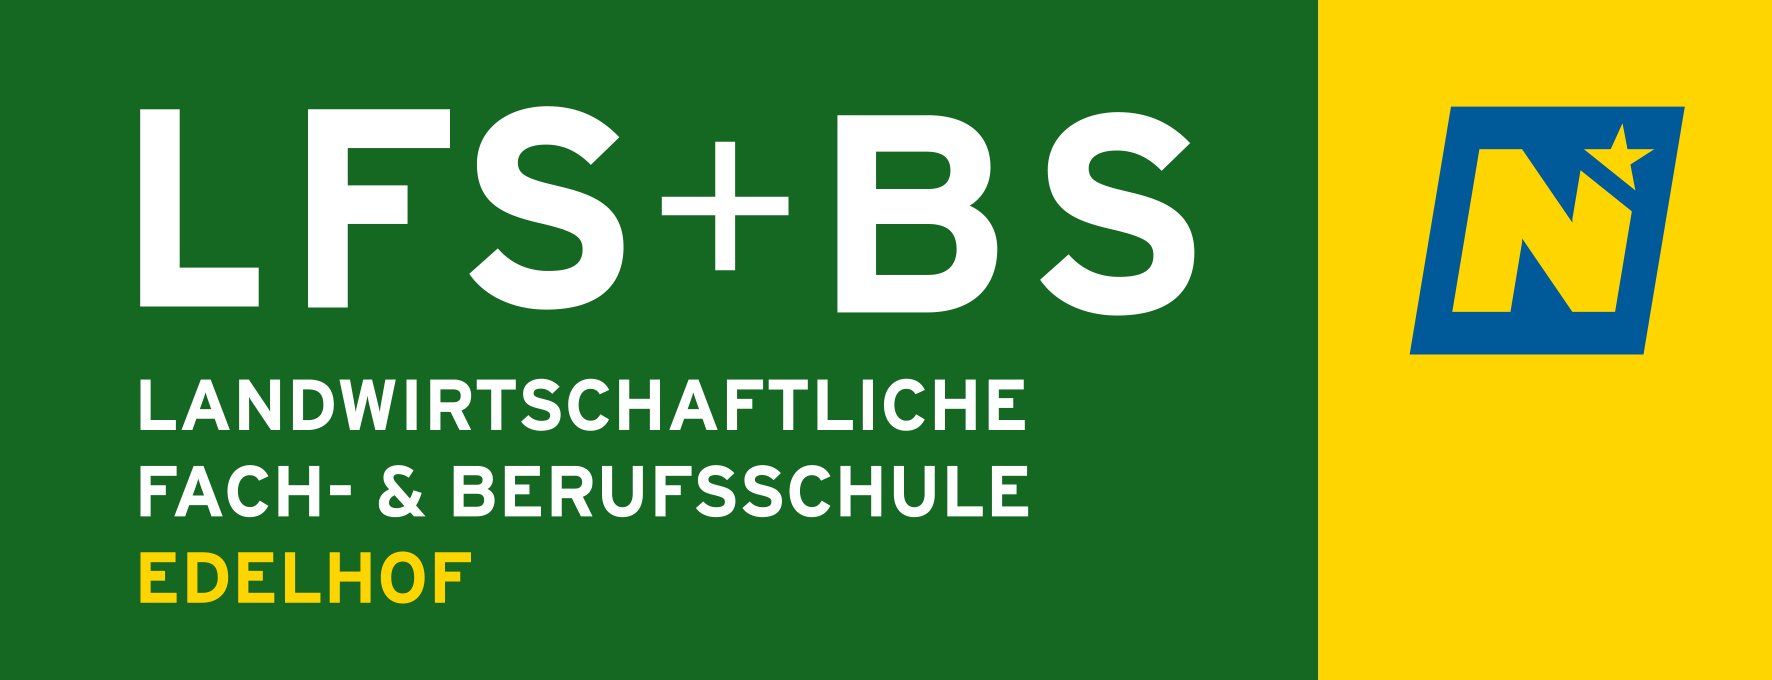 LFS + BS Edelhof Logo